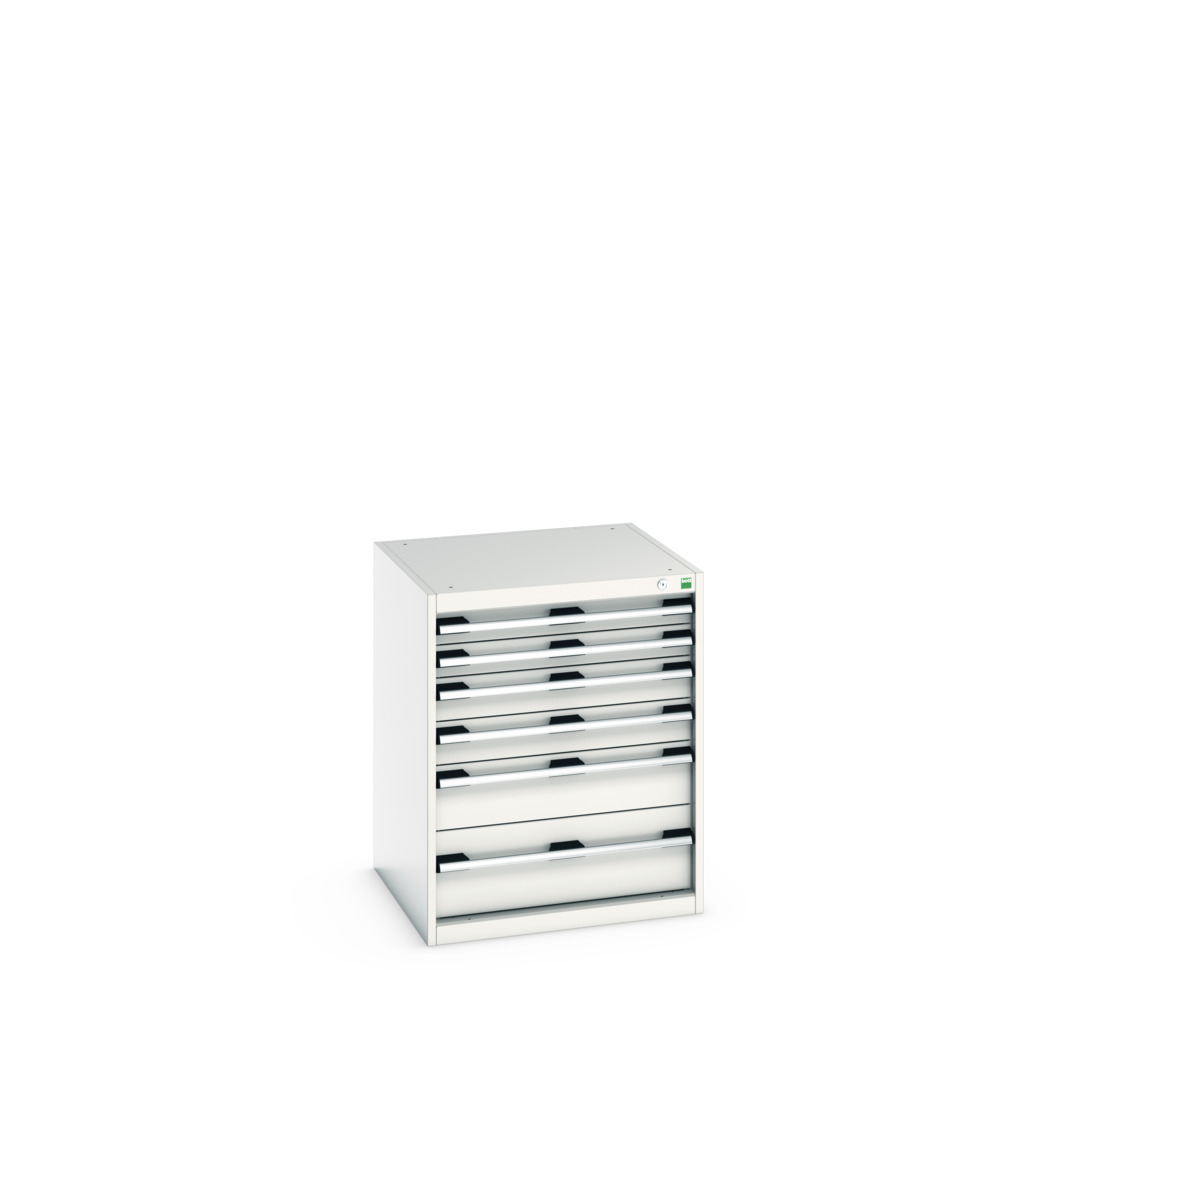 40019039.16V - cubio armoire à tiroirs SL-668-6.1